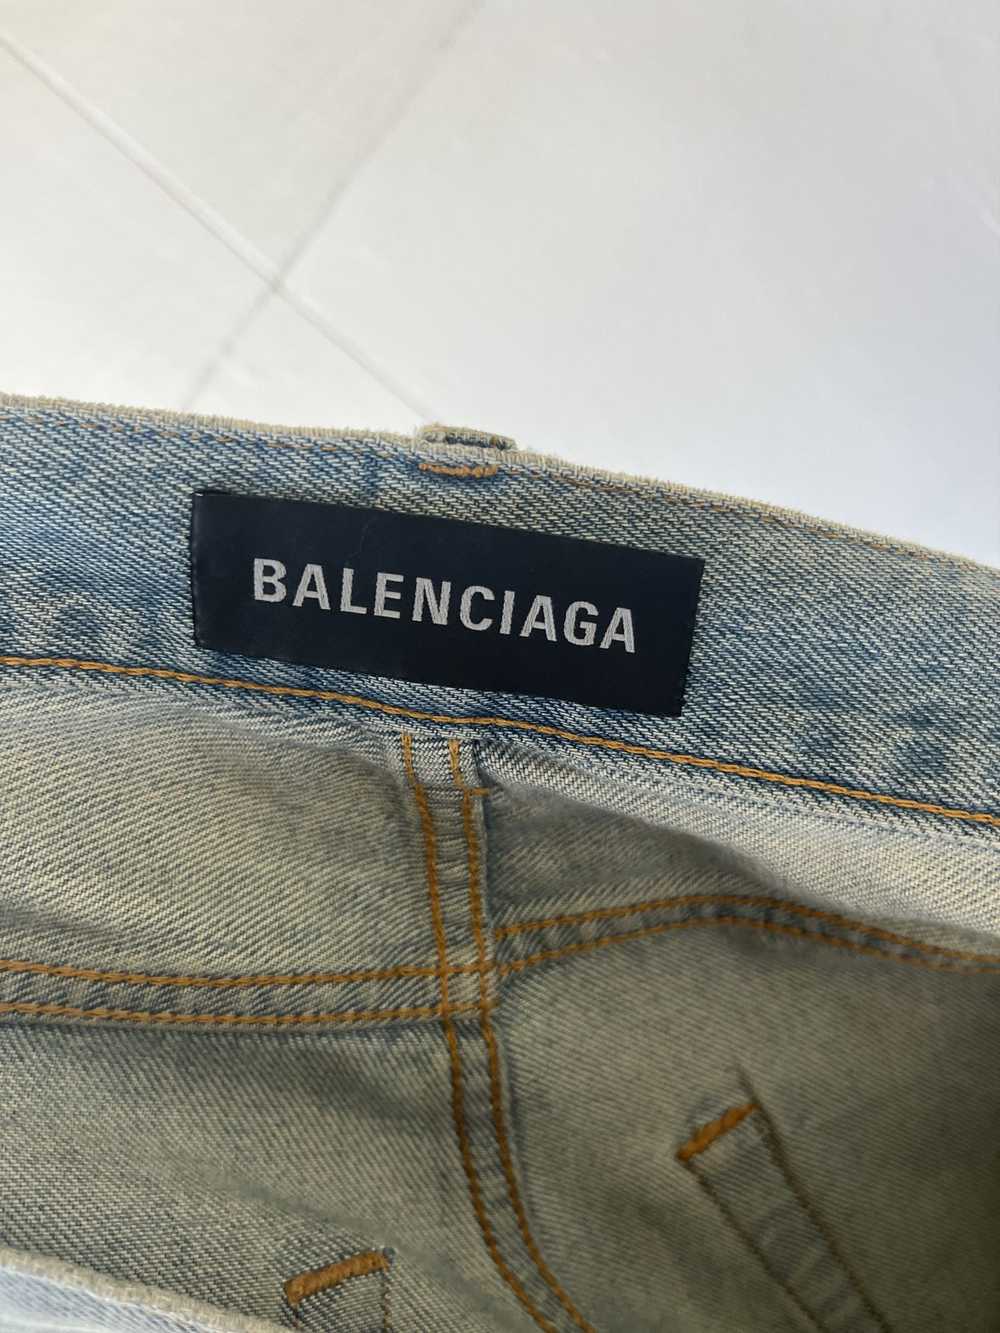 Balenciaga Balenciaga Mud Wash Denim Jeans - image 3